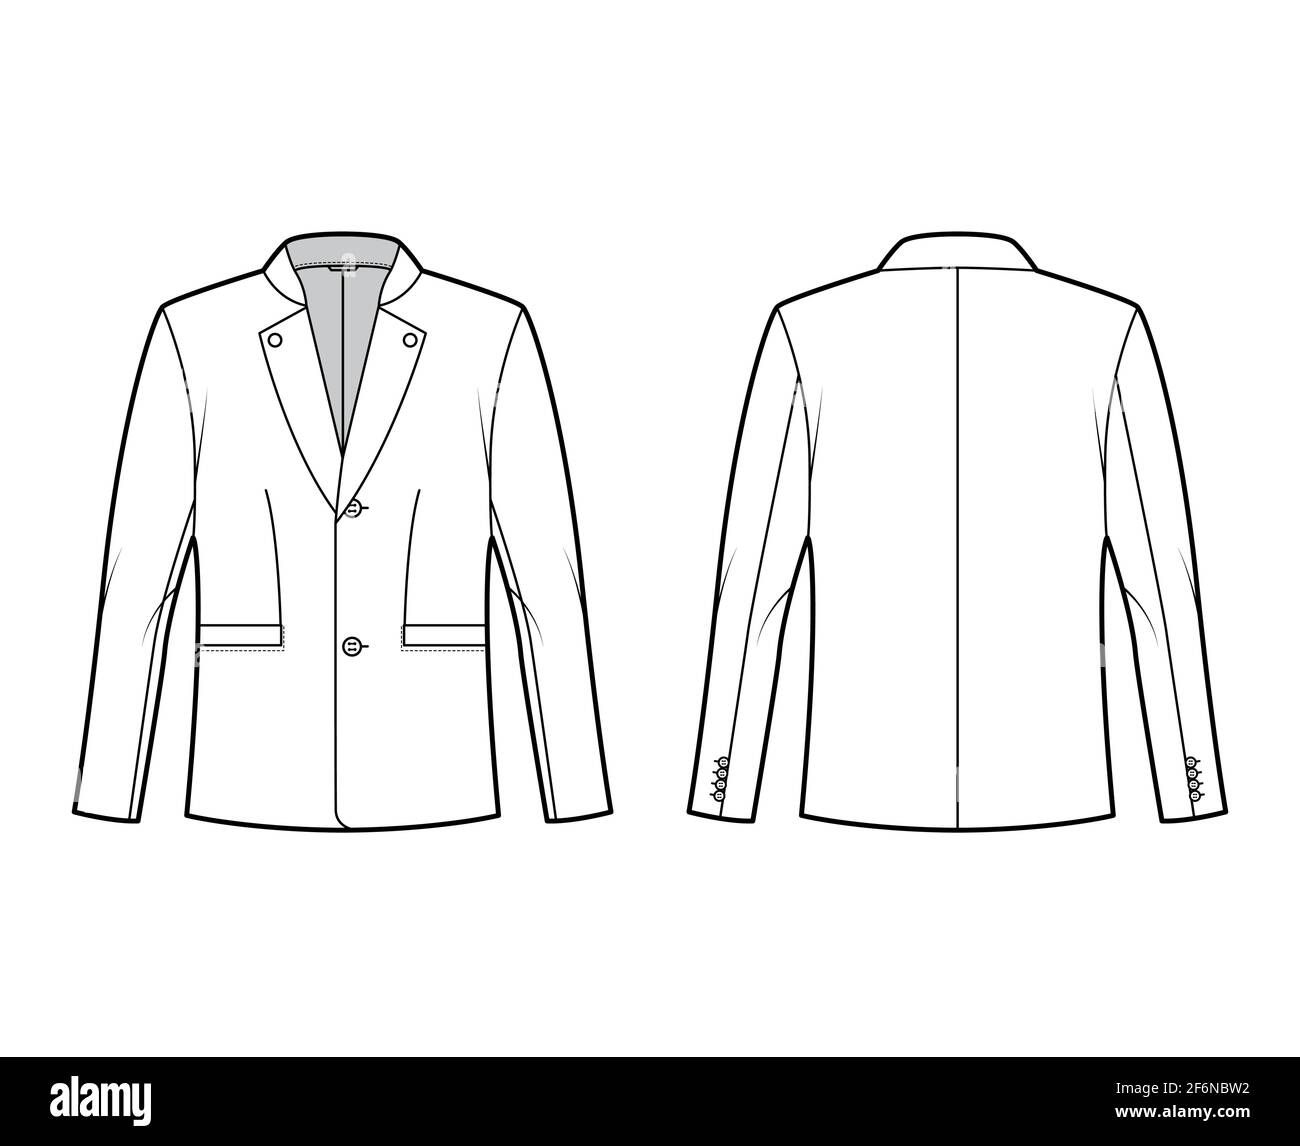 Tyrolean jacket tuxedo technical fashion illustration with long sleeves ...